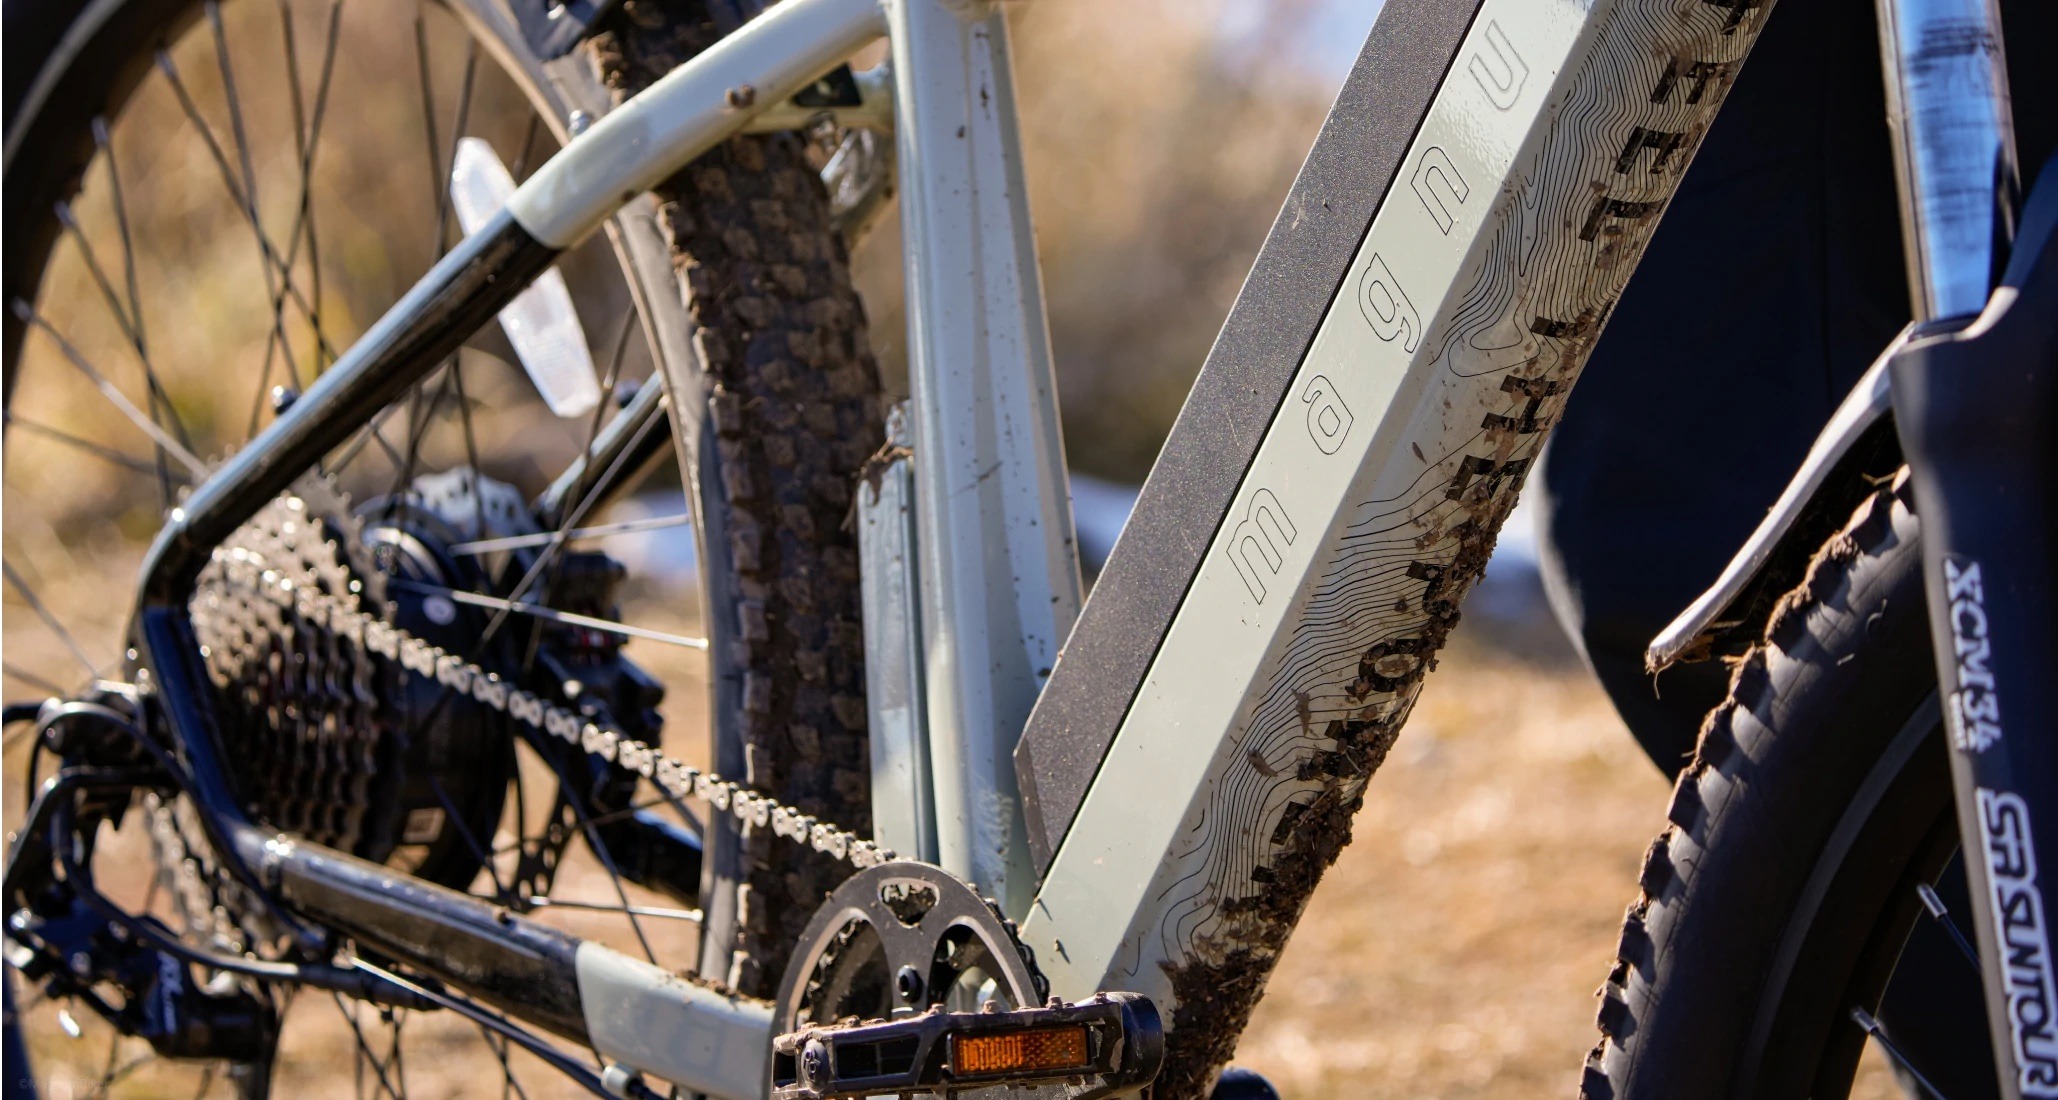 Close-up of Magnum Peak T7 electric bike covered in dirt and mud